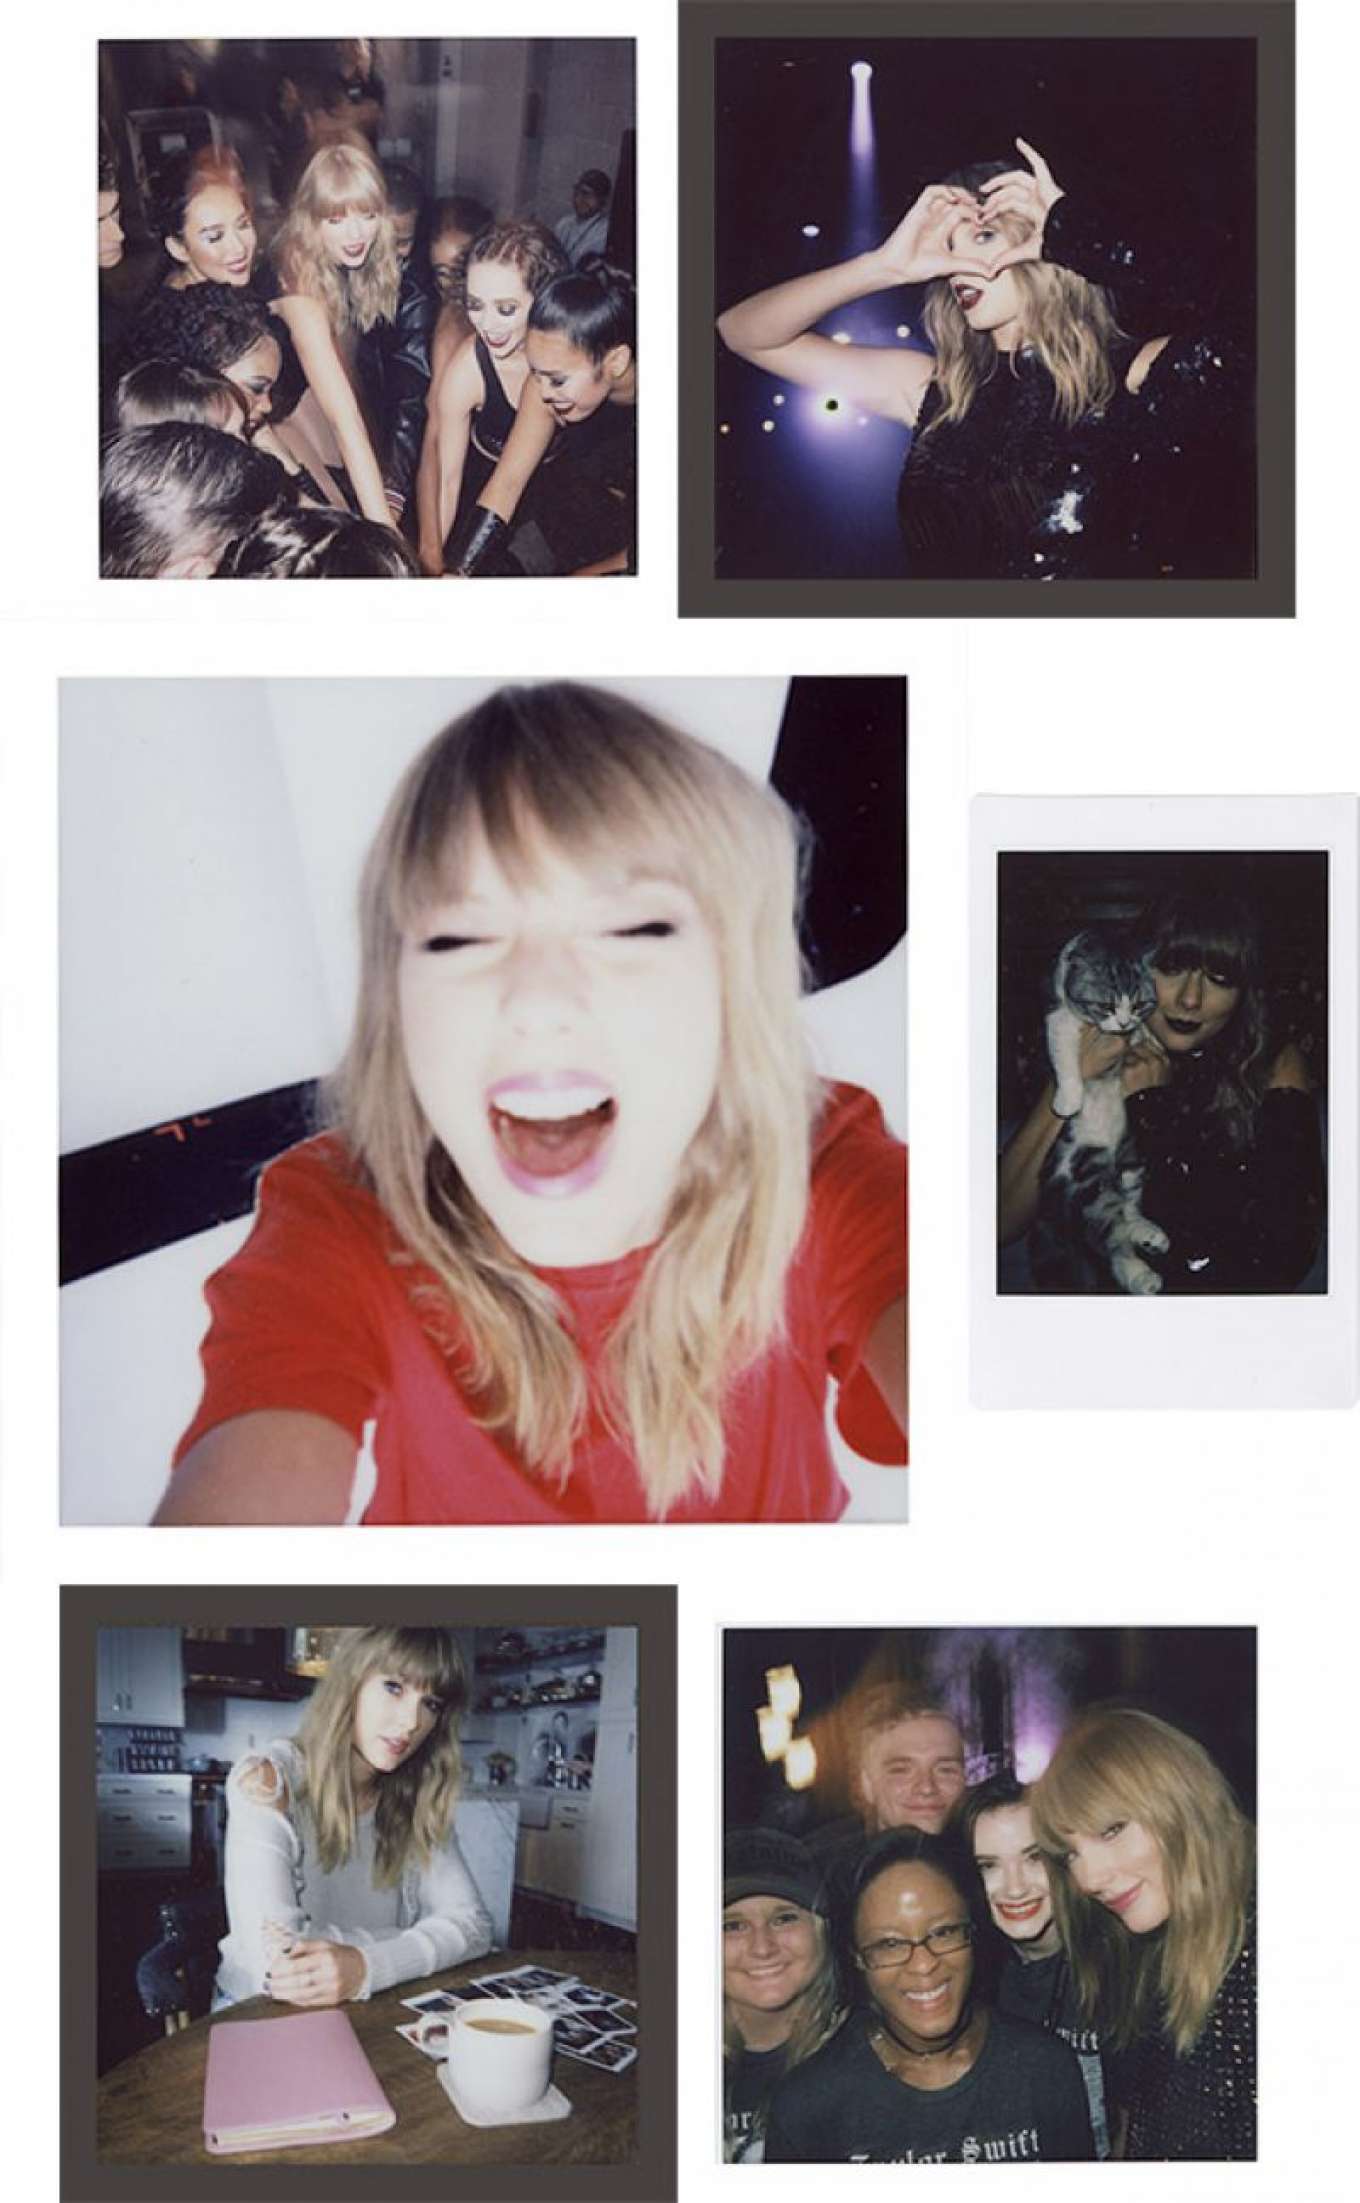 Taylor Swift for Fujifilm Instax Square SQ6 Taylor Swift Edition Camera